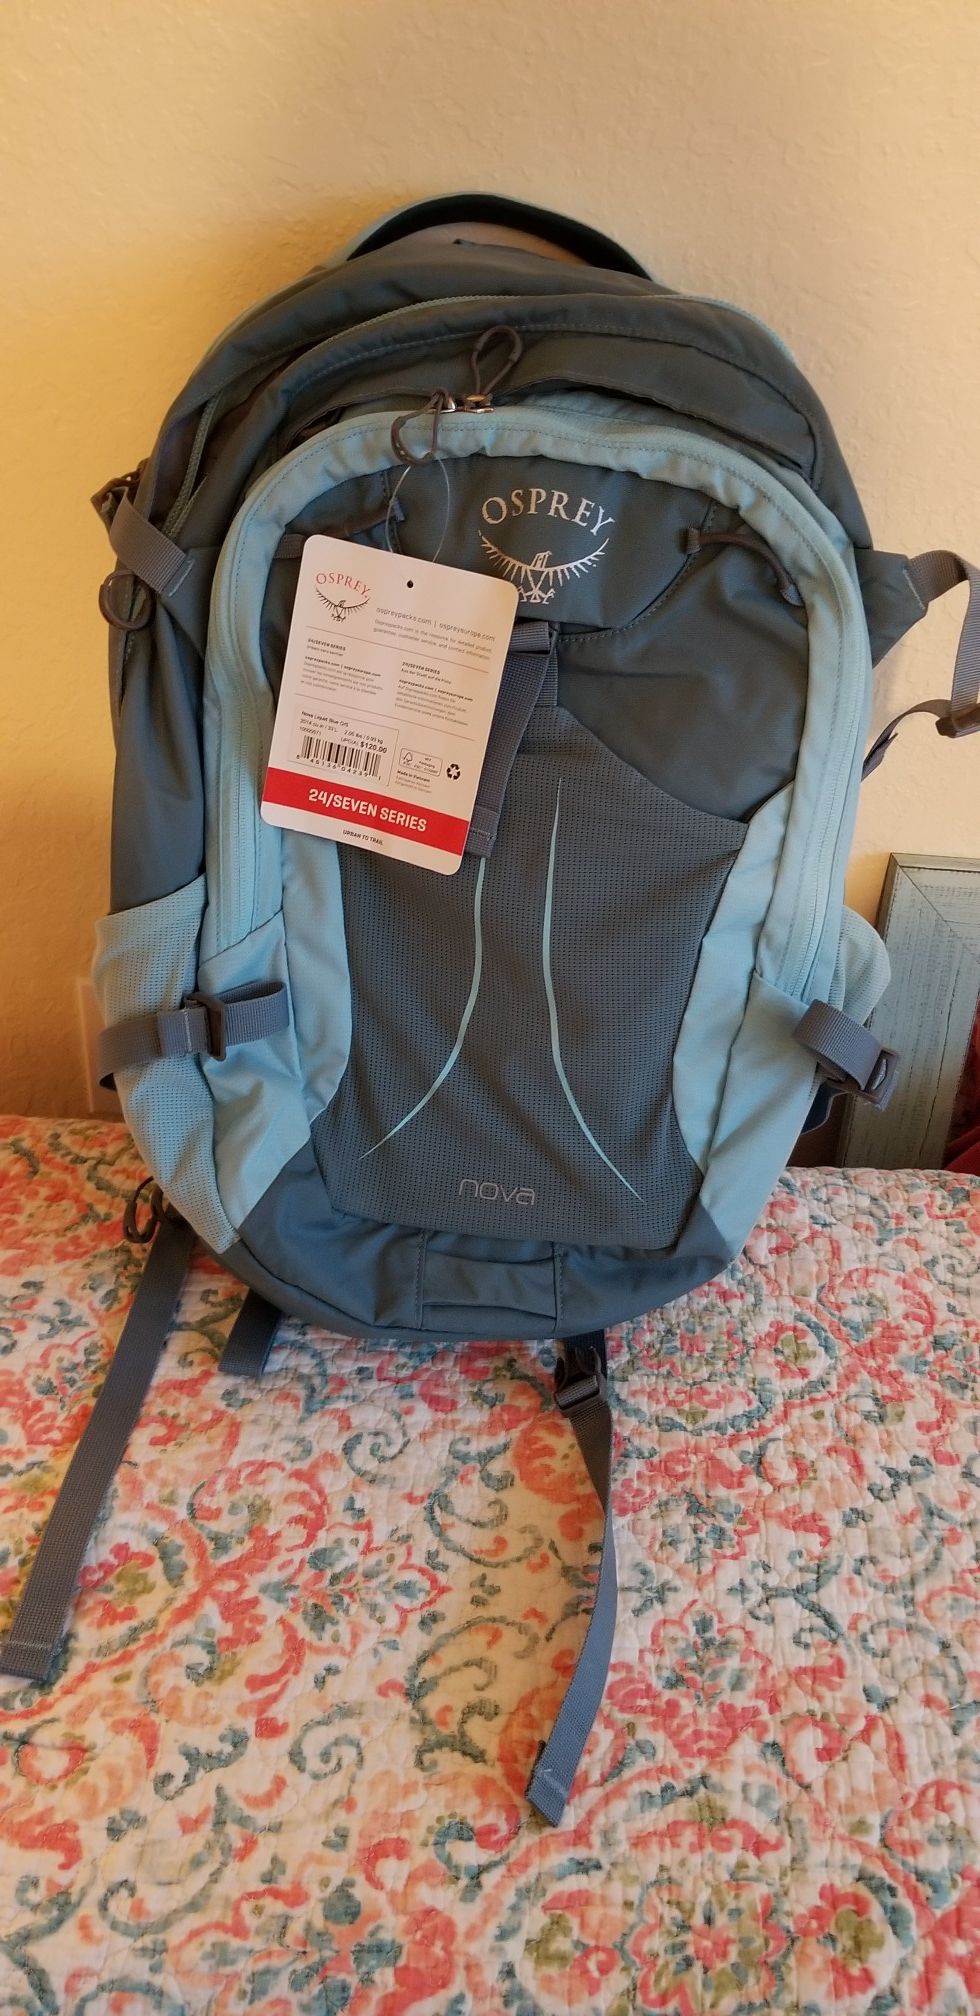 Osprey 24/7 series backpack